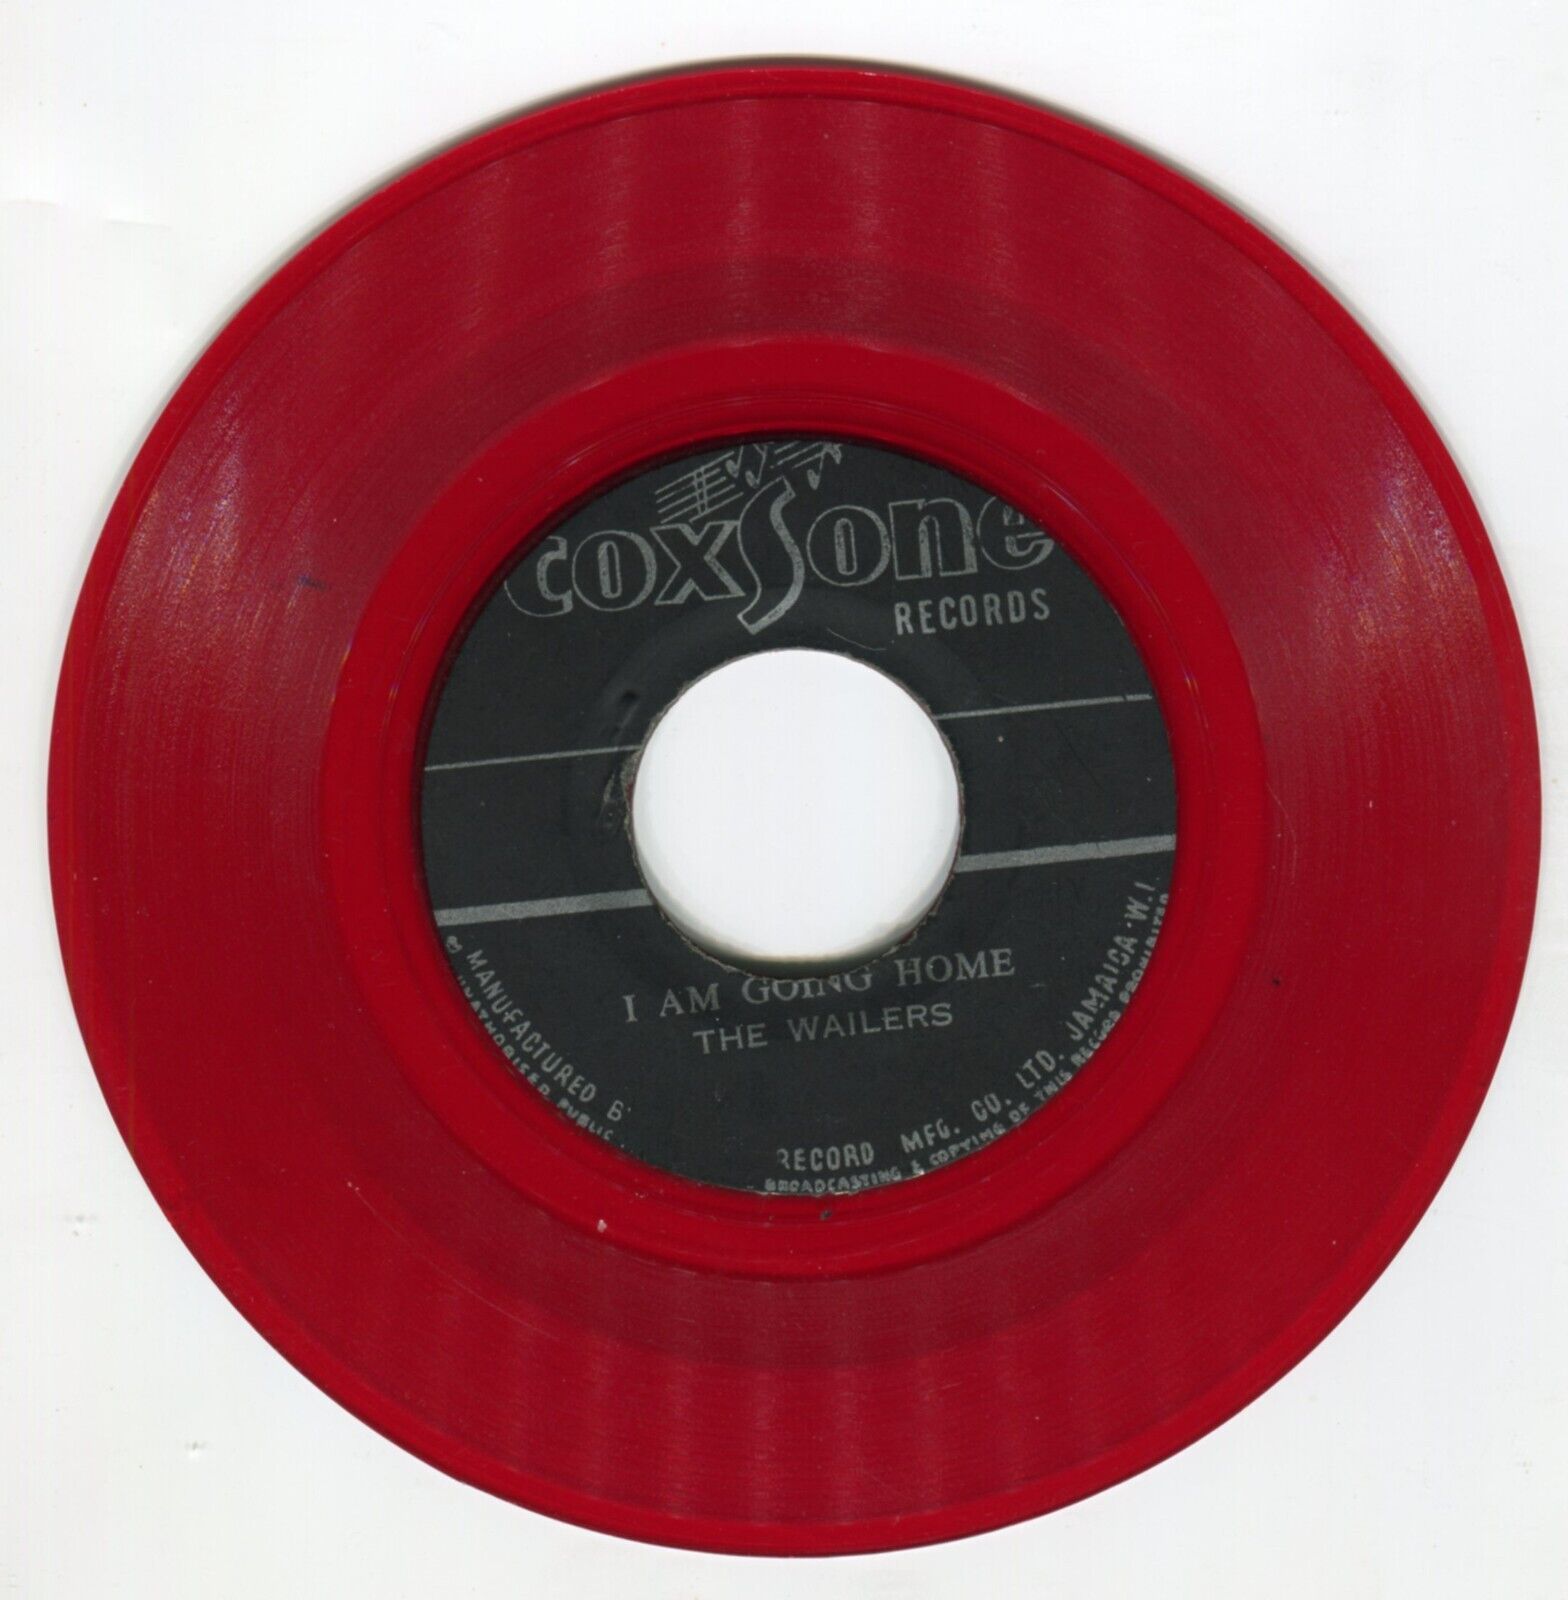 Pic 1 The Wailers: Destiny c/w I Am Going Home on JA Coxsone RED vinyl